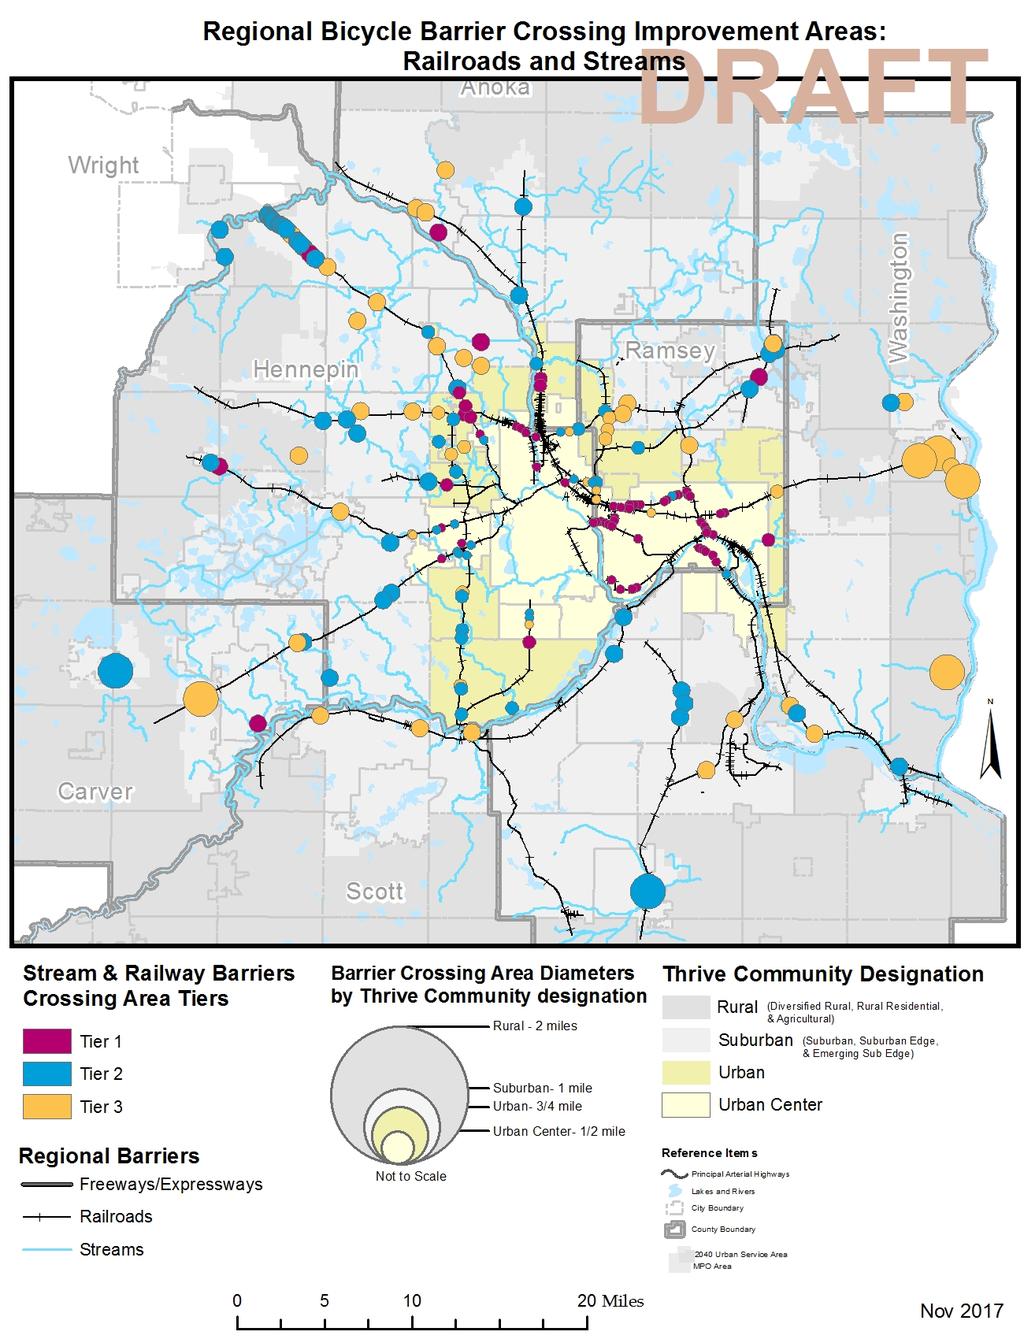 Figure xx: Regional Barrier Crossing Improvement Areas: Streams and Railroads 2040